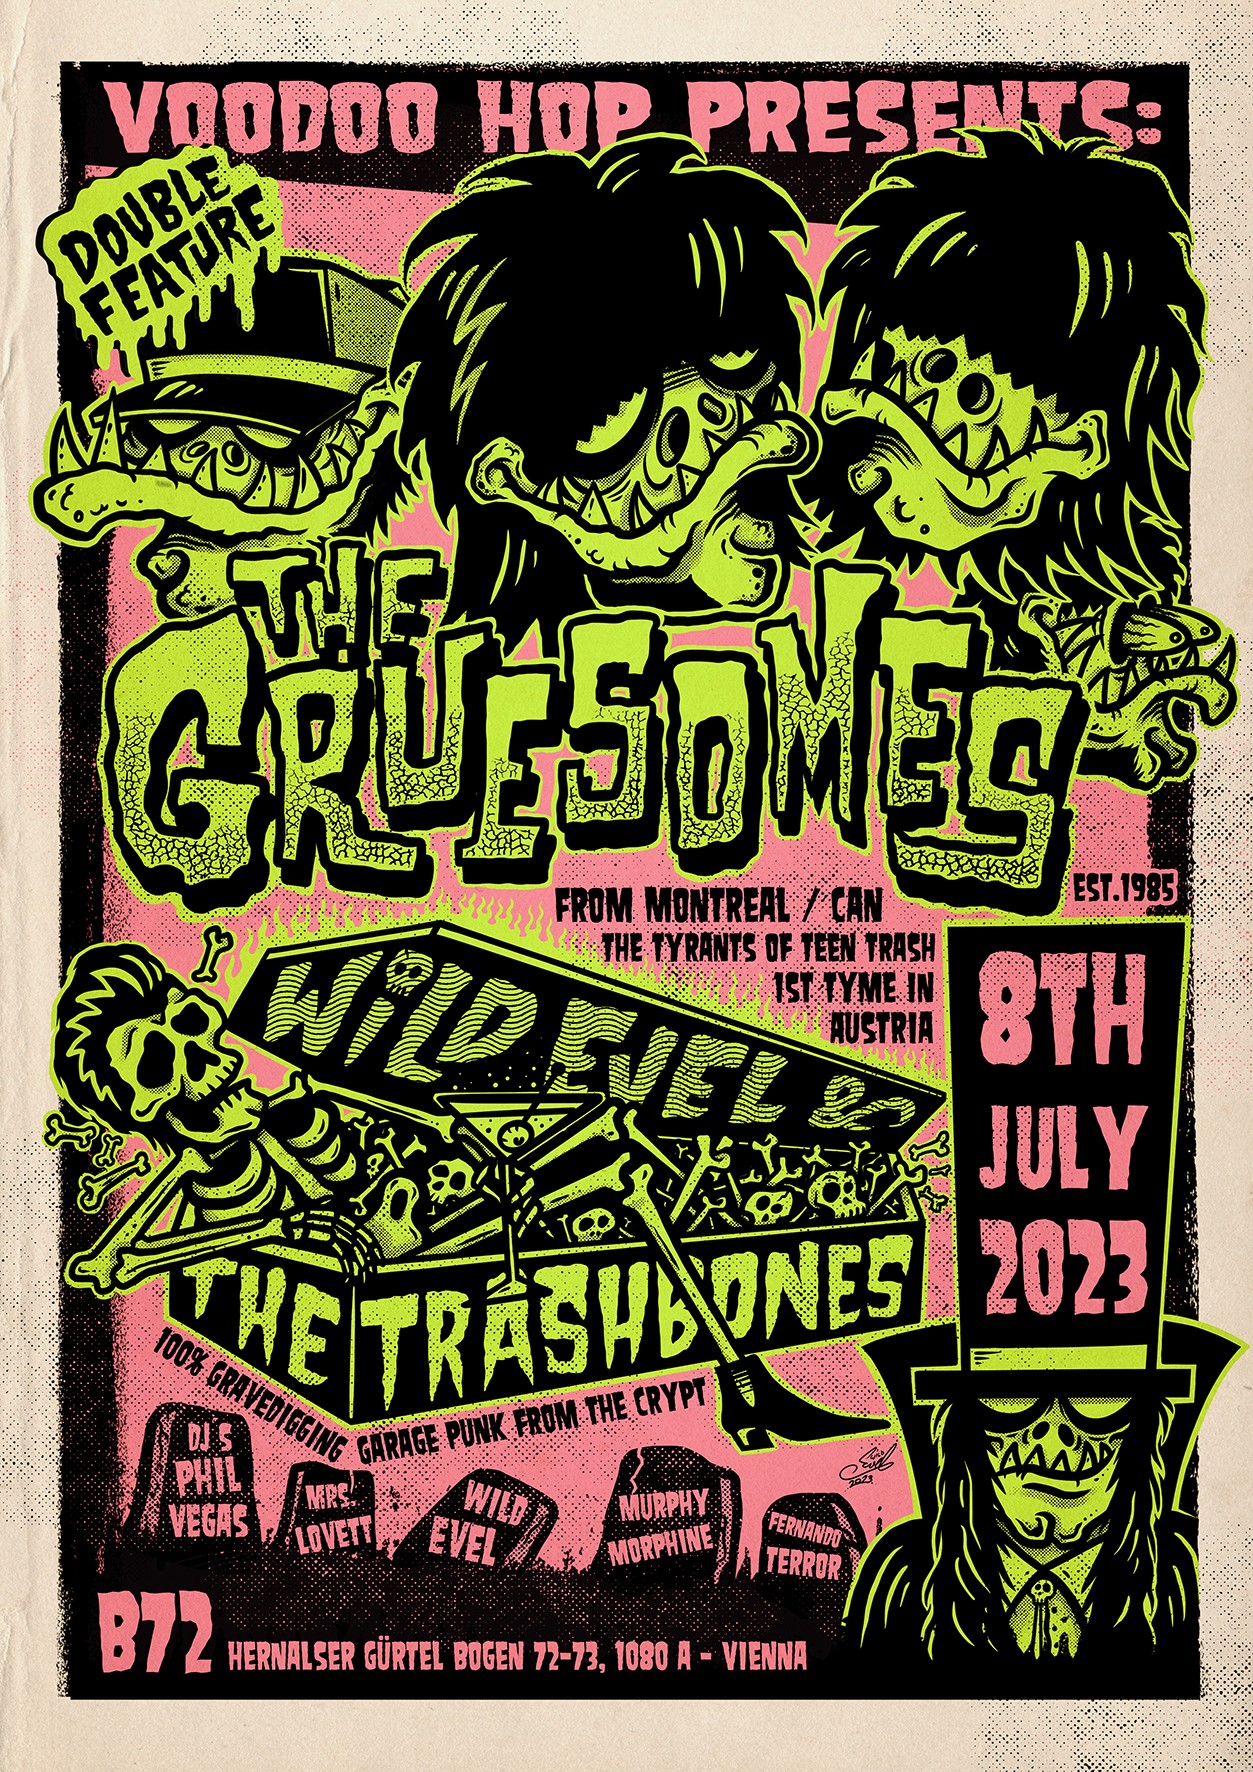 The Gruesomes + Wild Evel & The Trashbones + DJ's am 8. July 2023 @ B72.